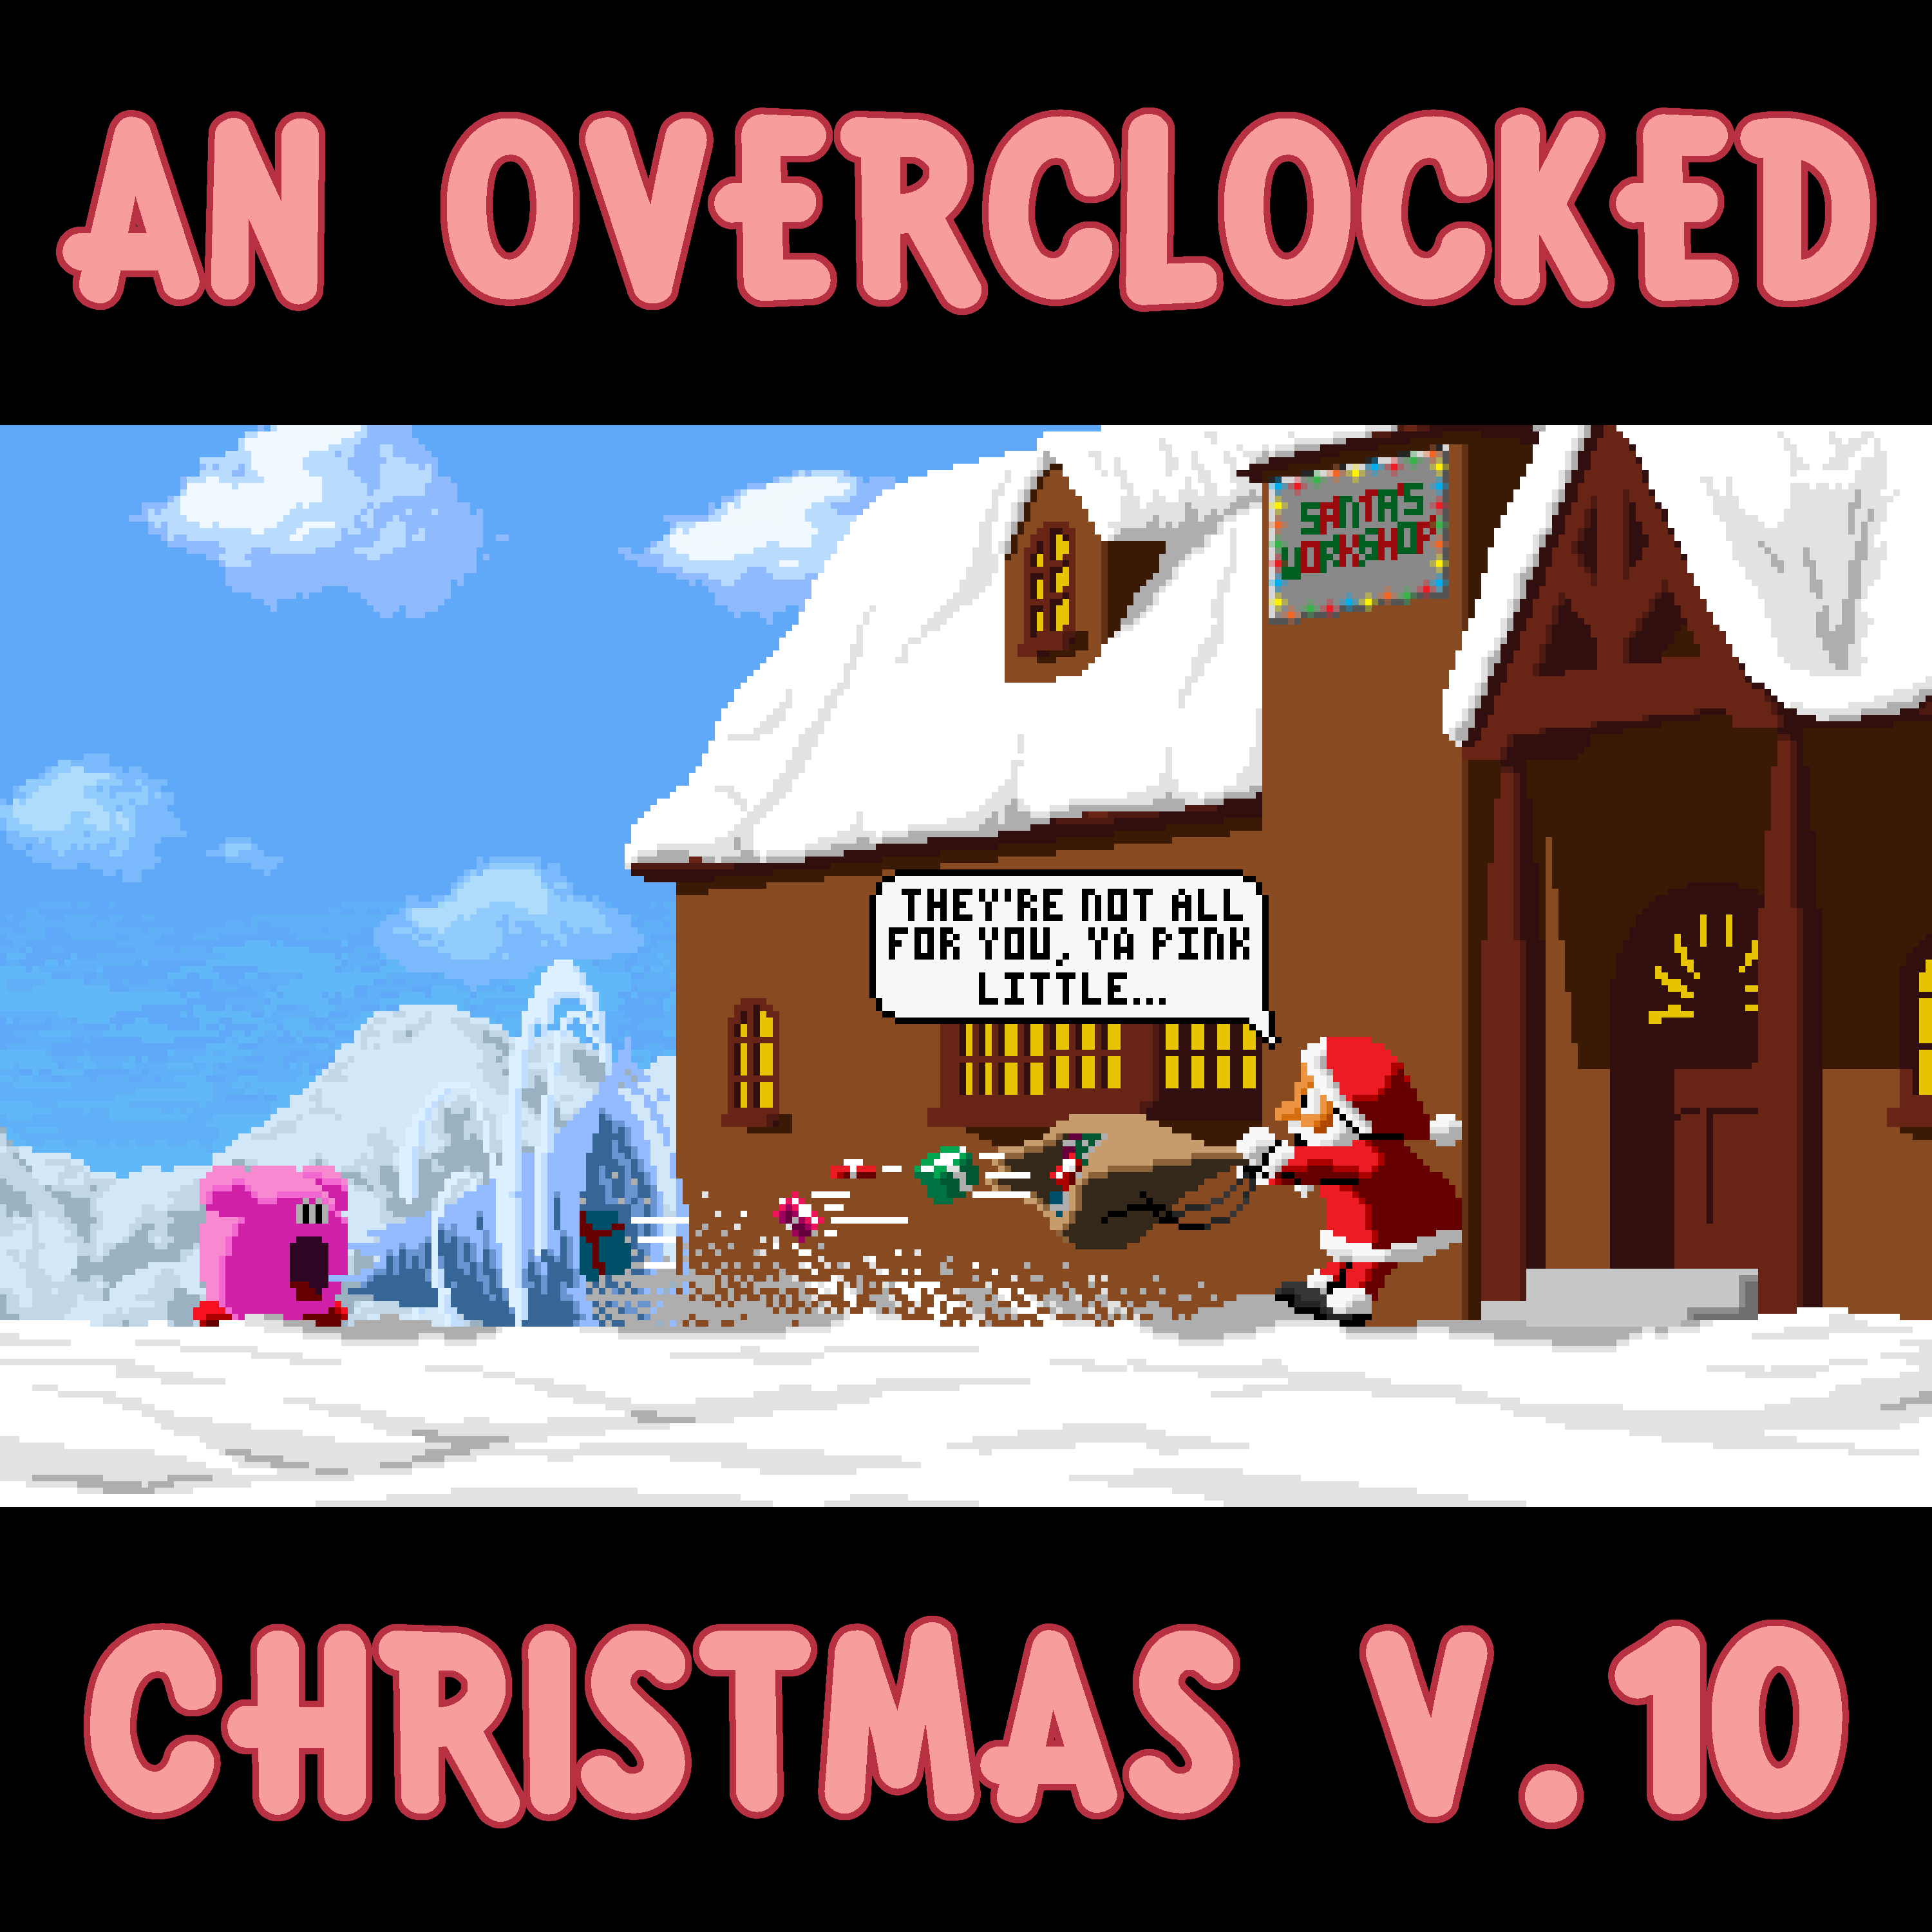 An OverClocked Christmas v.10 cover